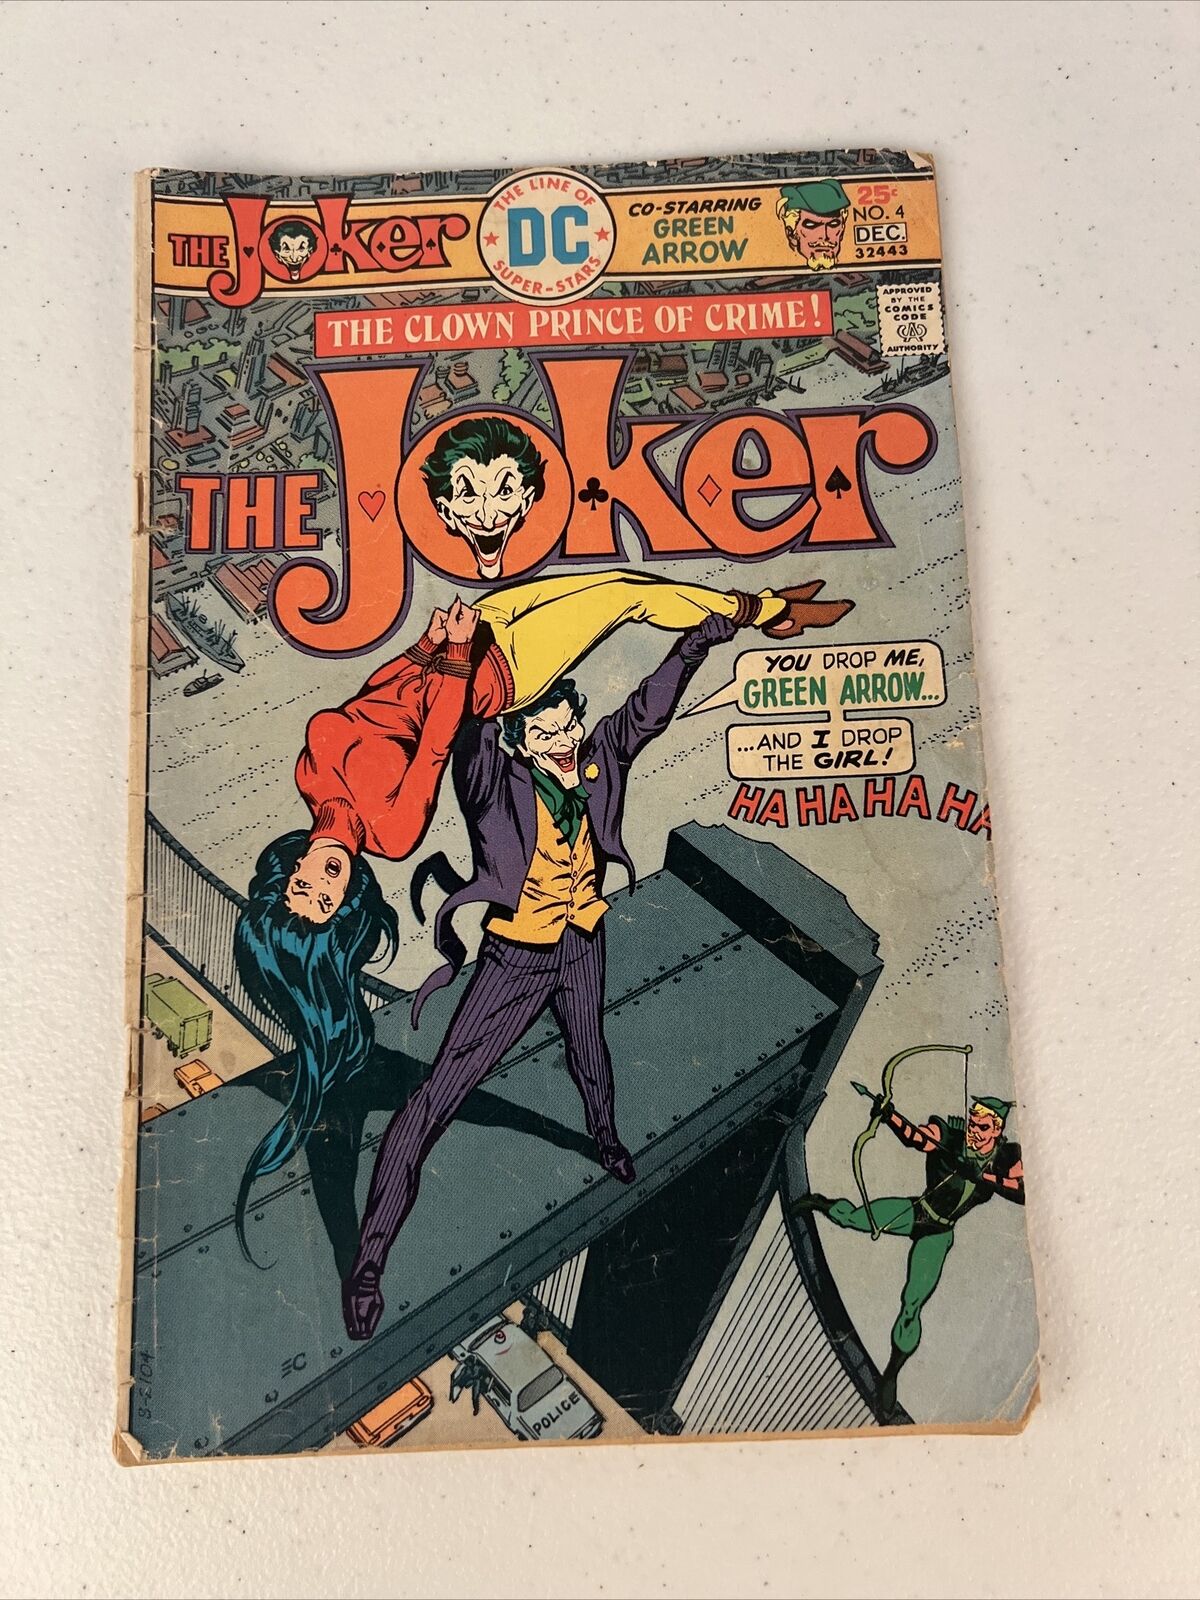 The Joker #4 DC Comics November-December 1975